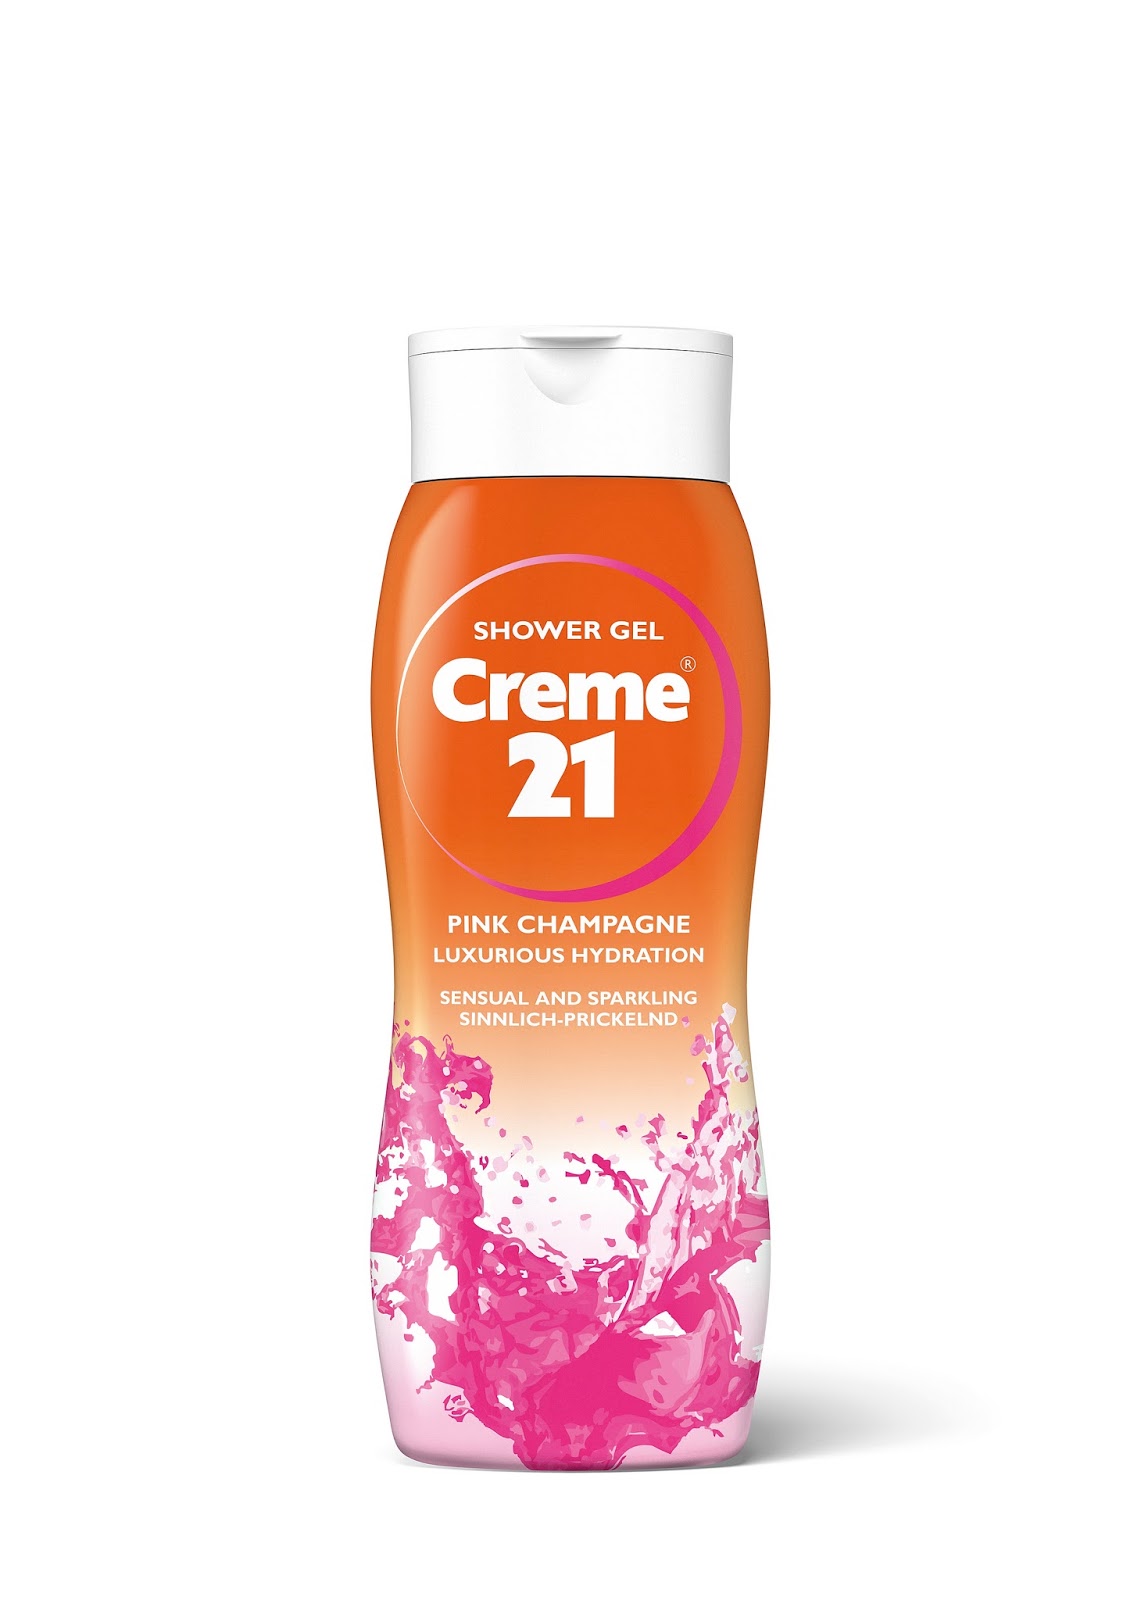 Creme Shower Gel. Гель для душа розовое шампанское. Гель для душа бренды. Creme 21 гель для рук. Shower cream gel